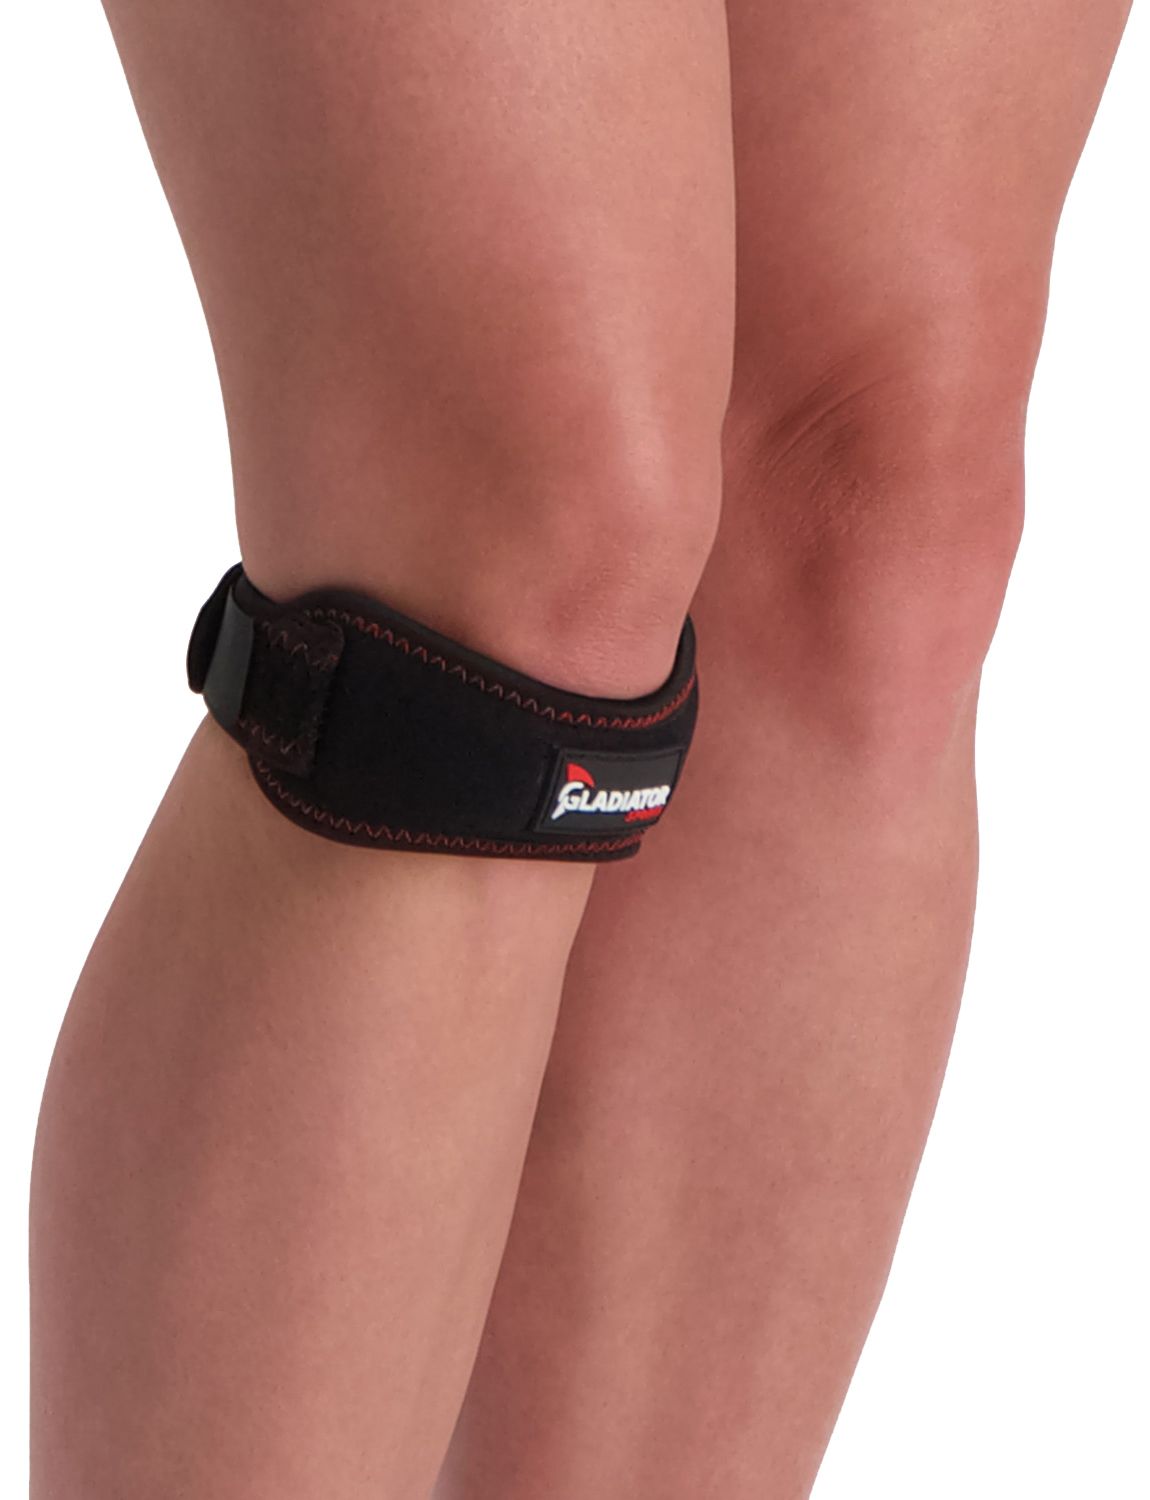 gladiator sports knee strap for sale